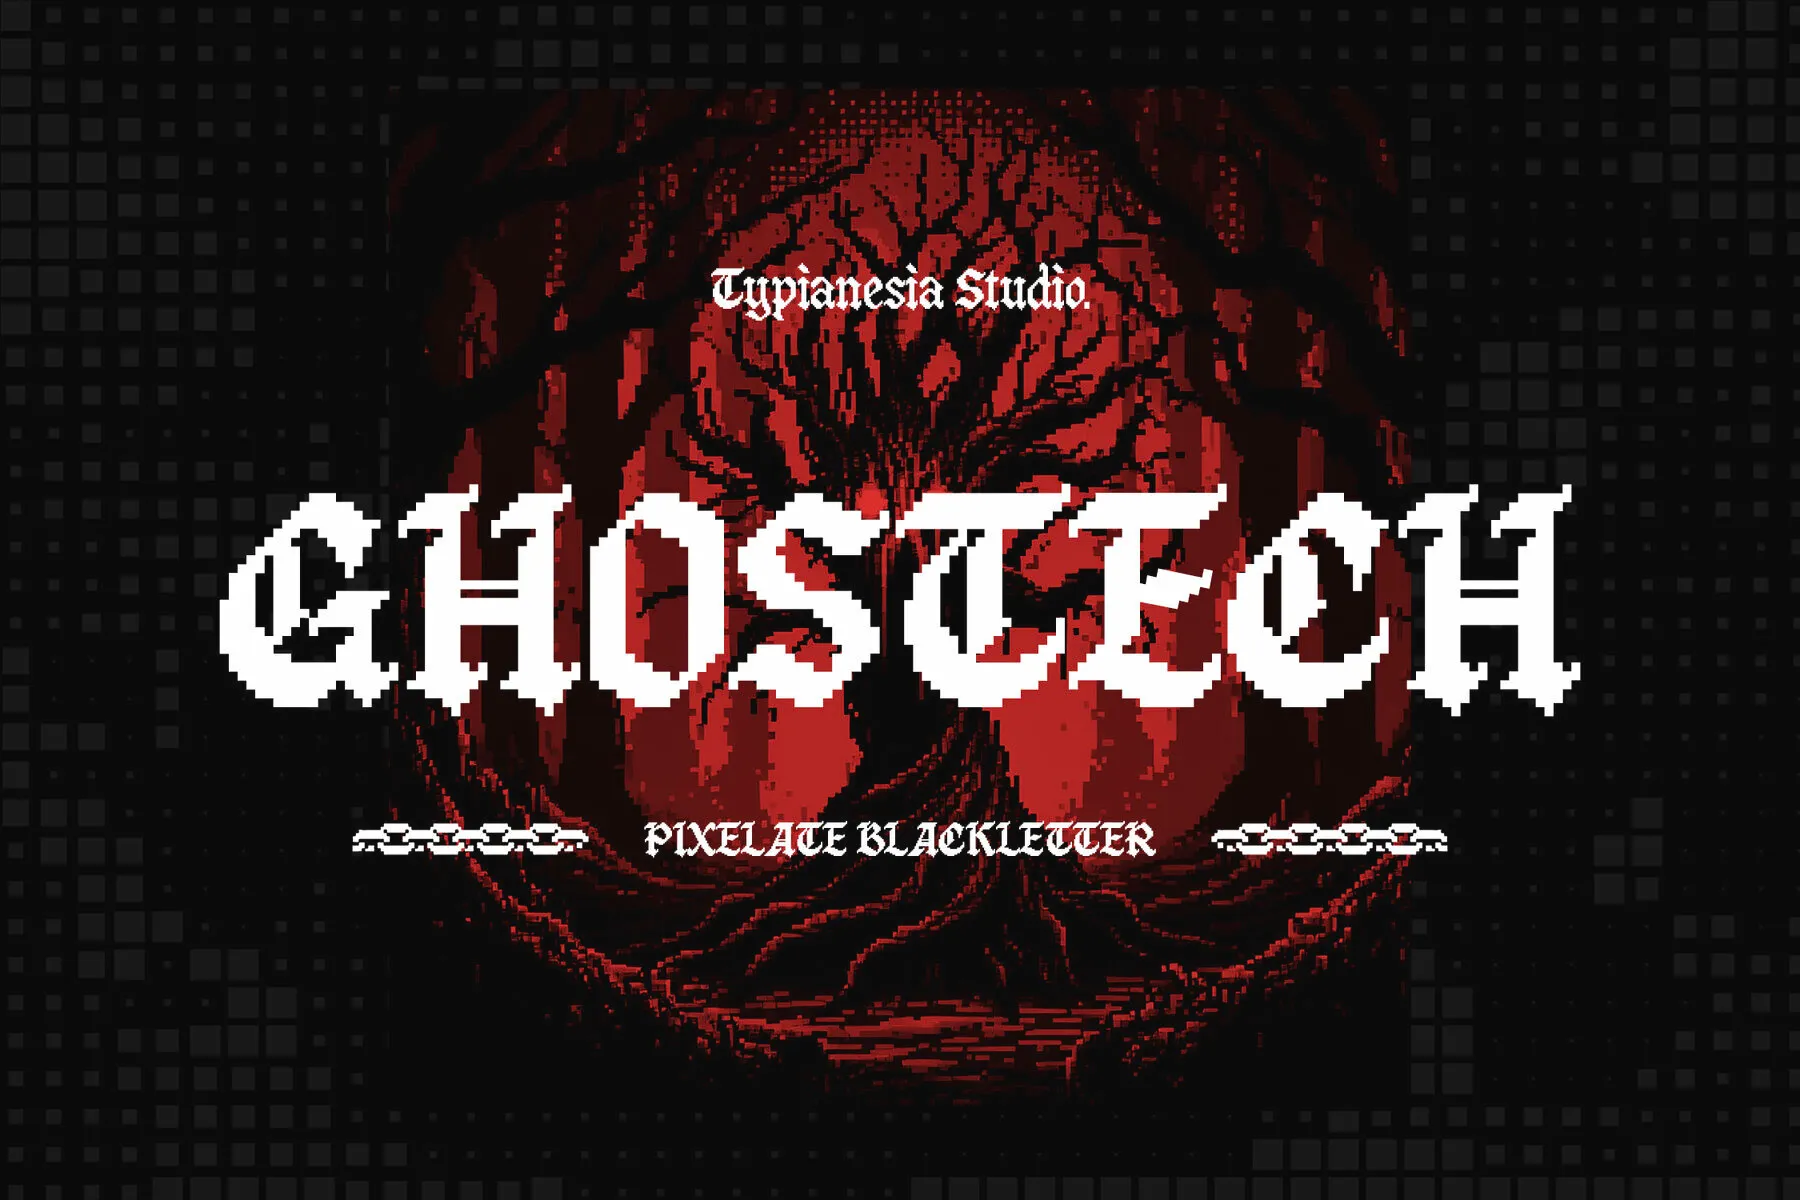 Ghostech